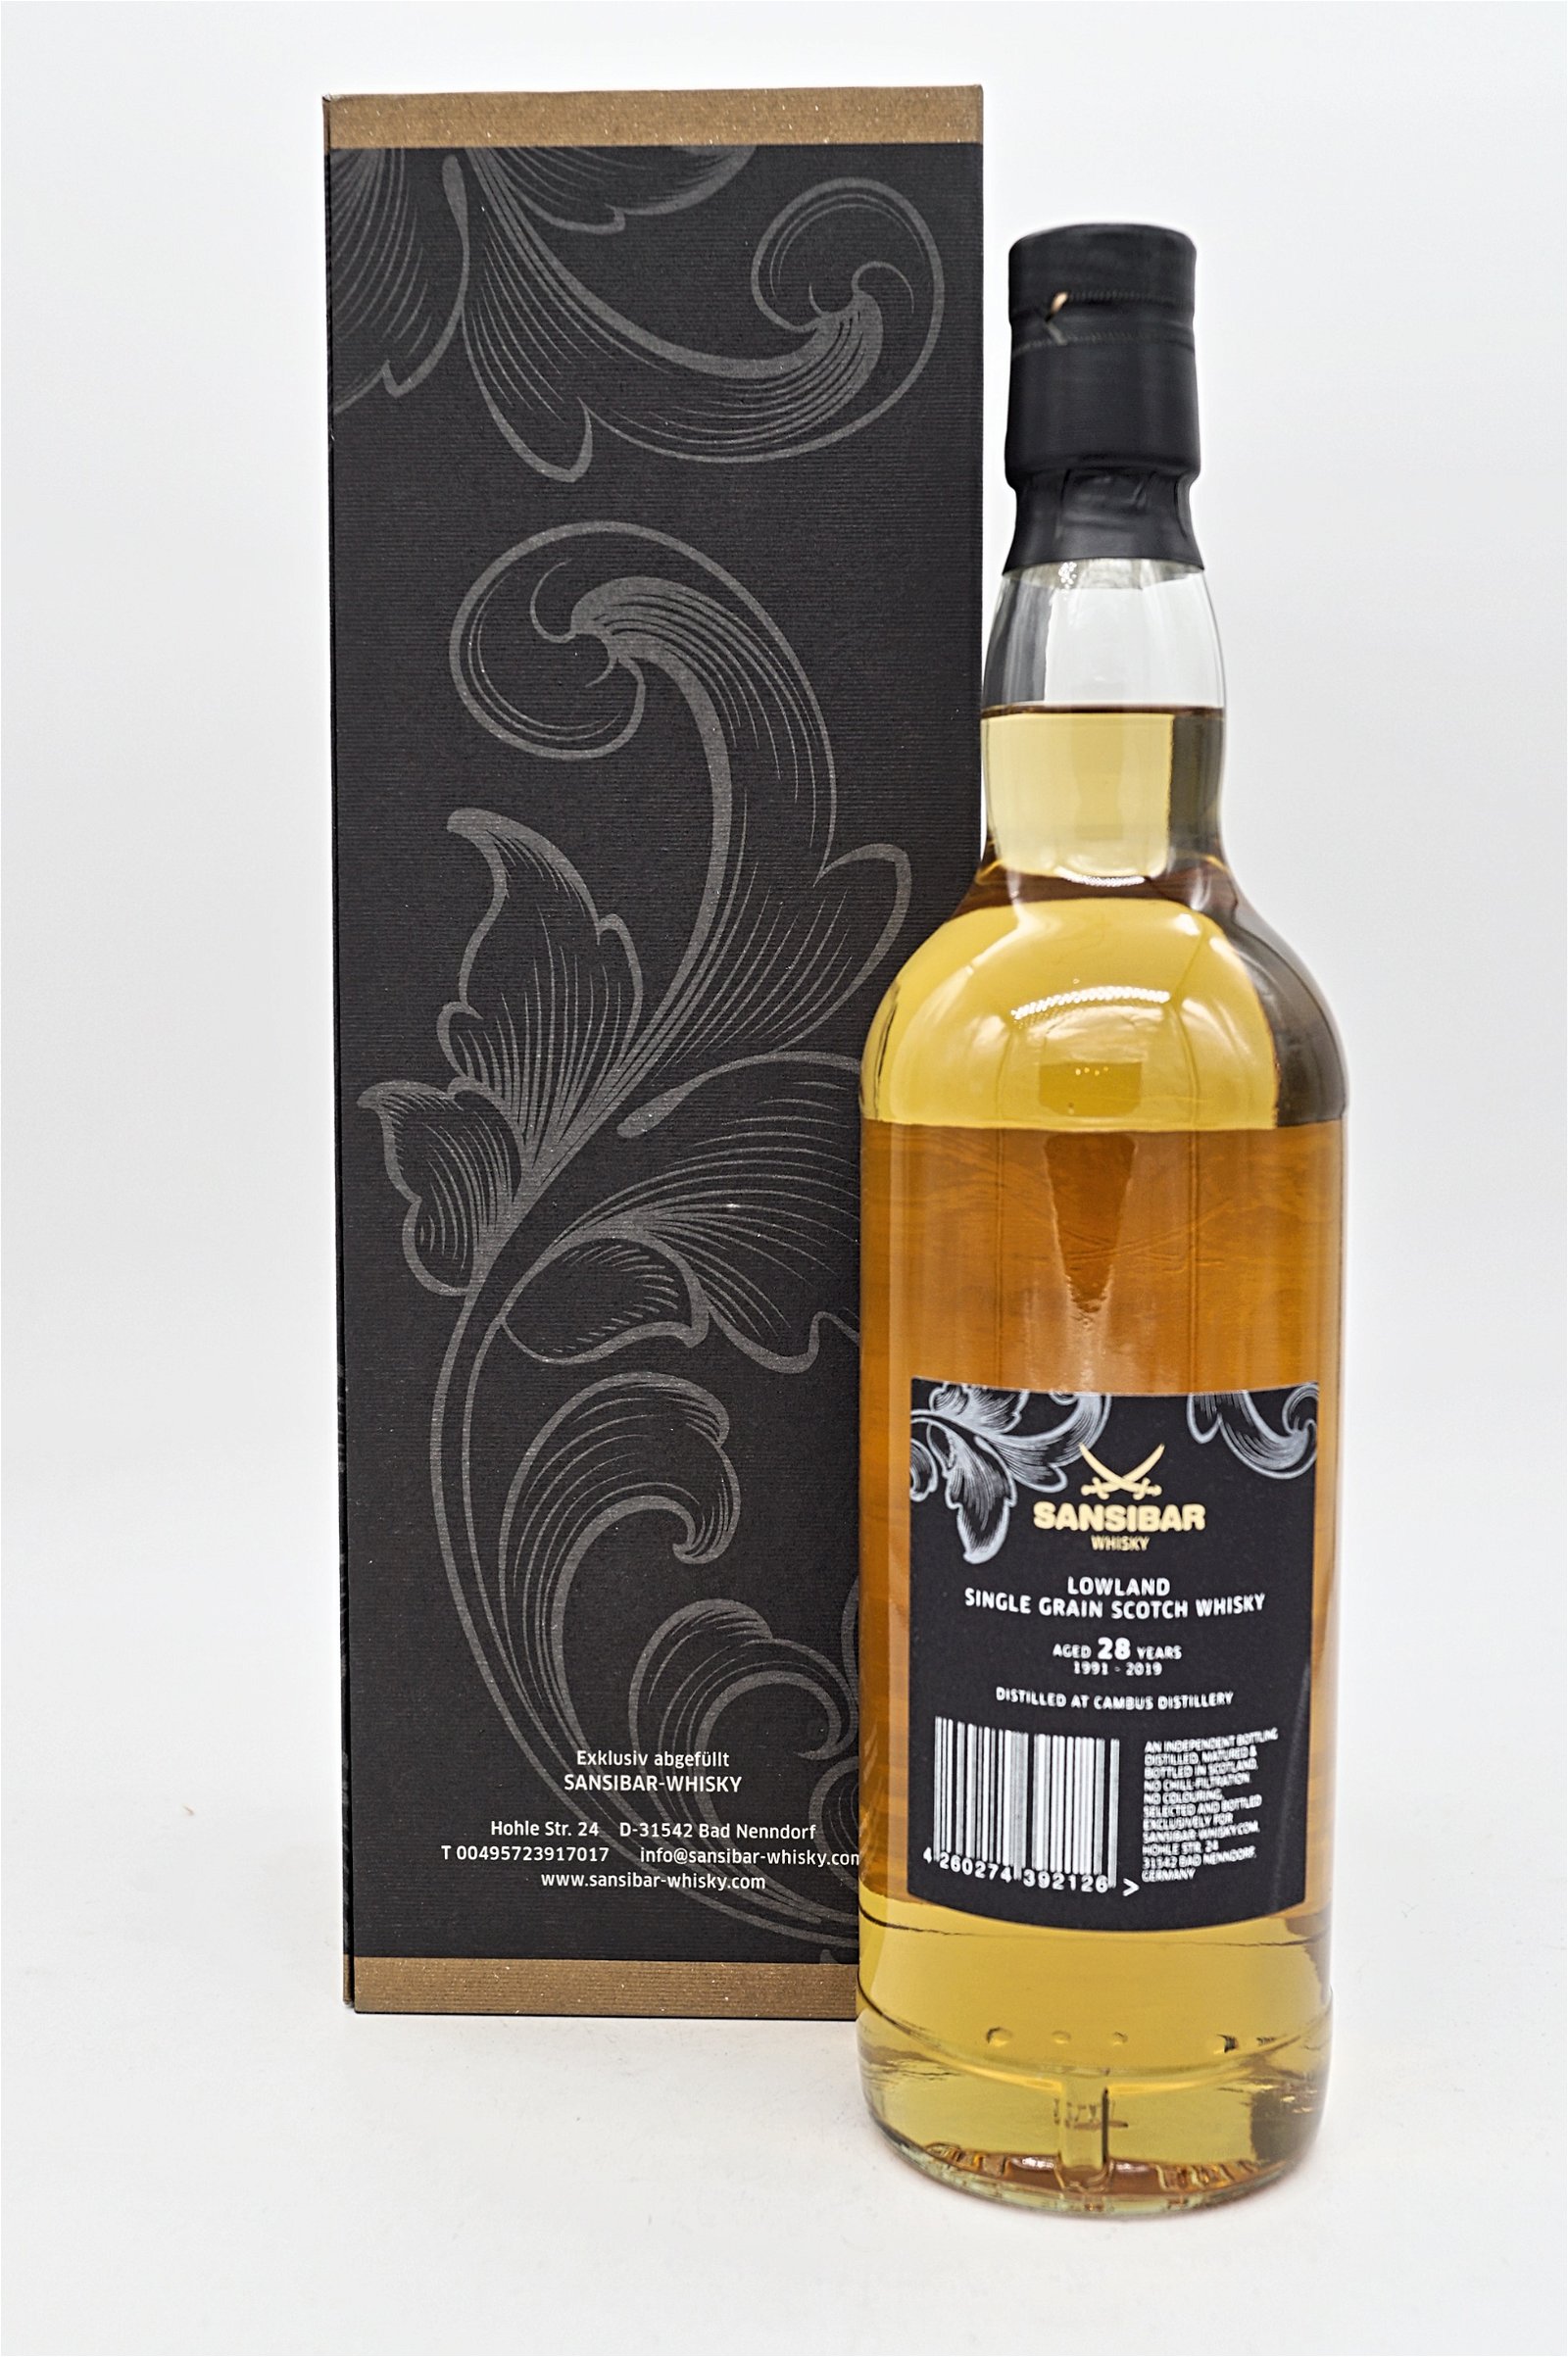 Sansibar Whisky 28 Jahre Cambus Distillery 1991/2019 Limited Edition Single Cask Single Grain Scotch Whisky